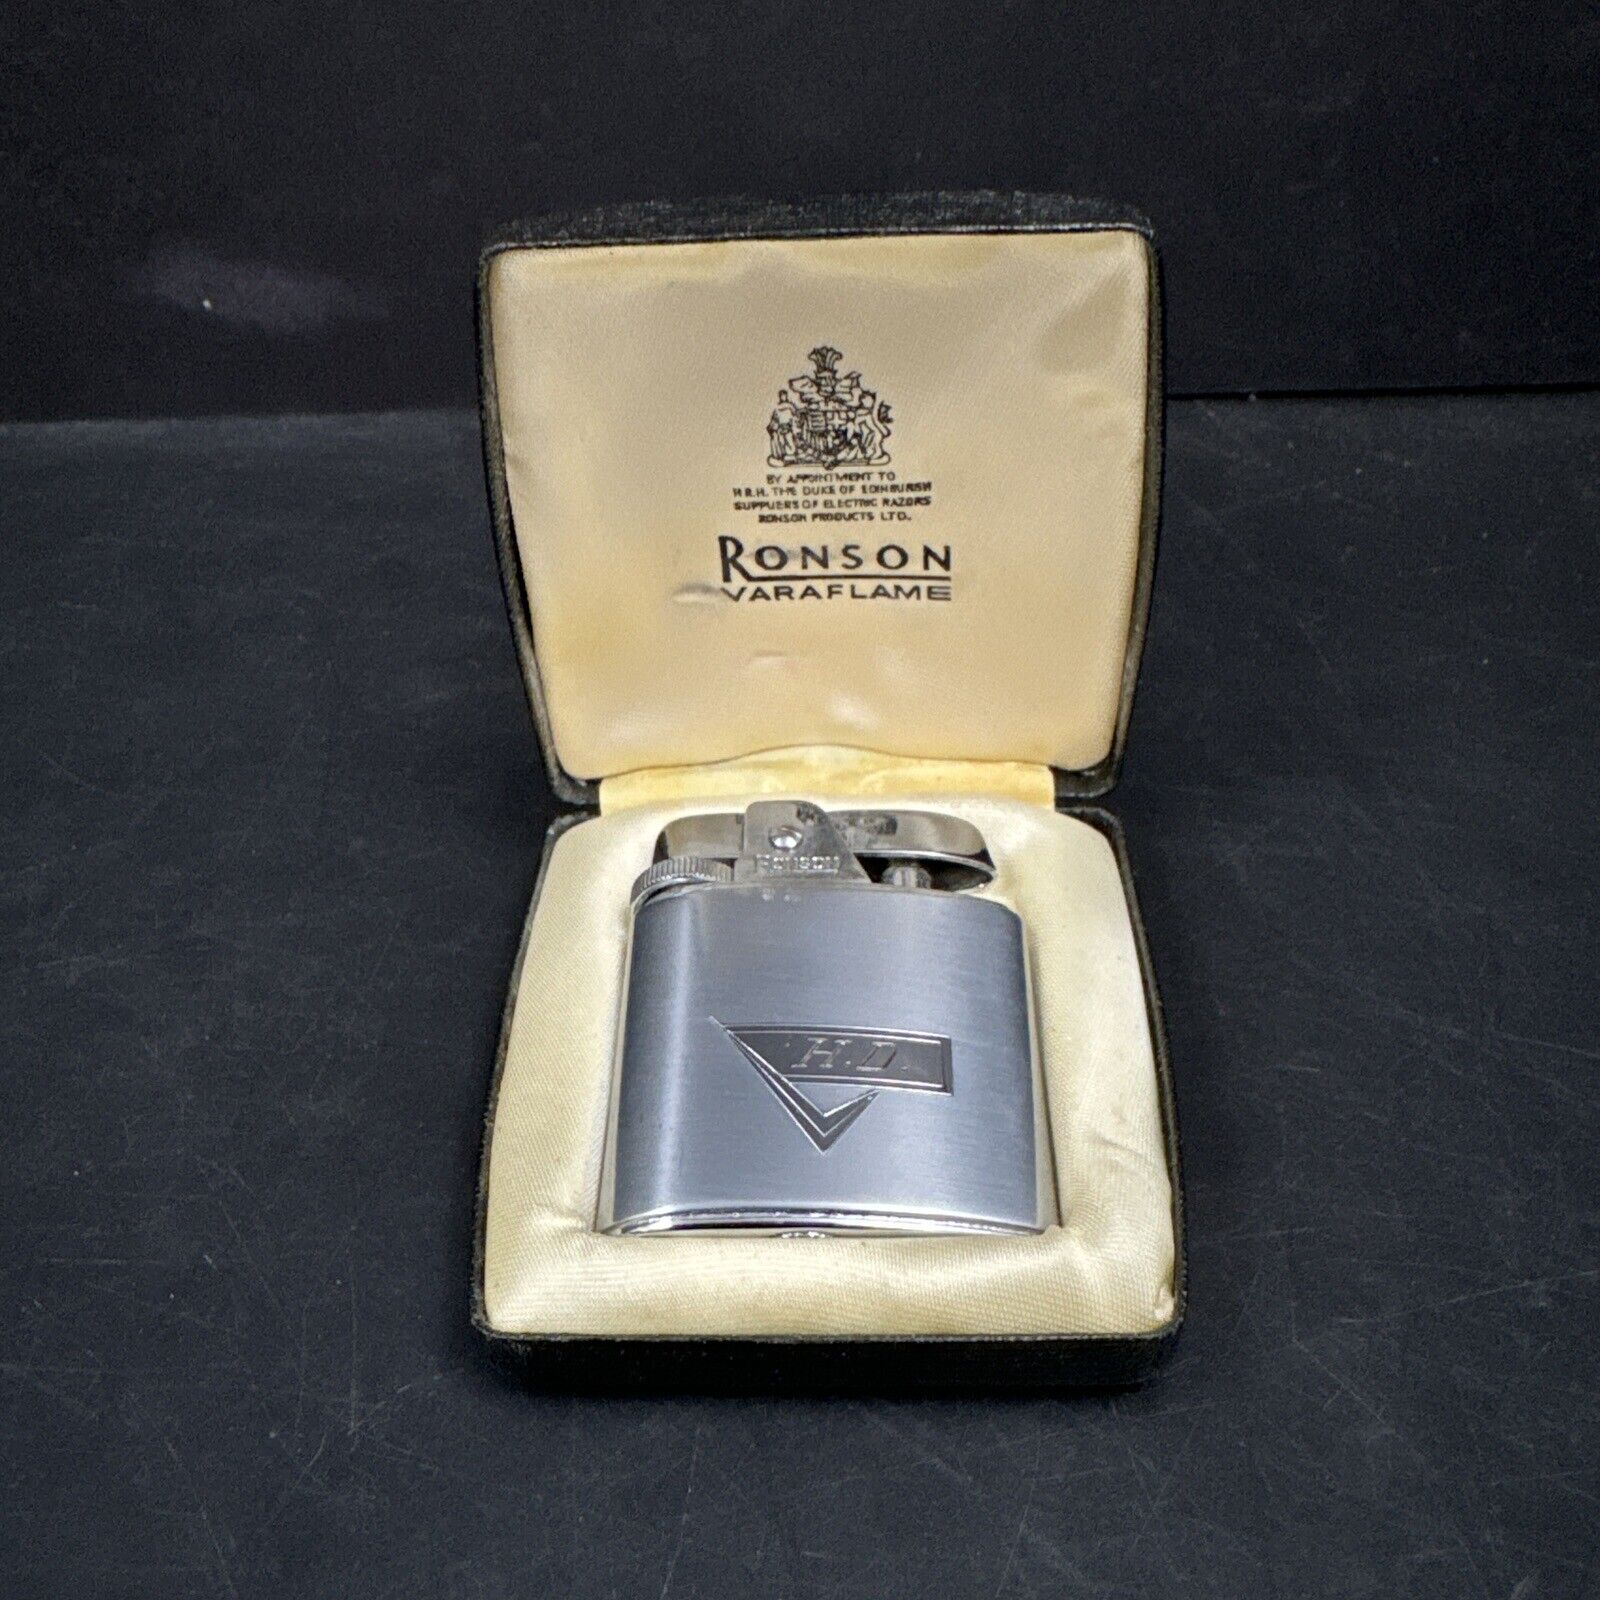 Vintage 1950s Ronson Varaflame Chevron Brushed Chrome Lighter Box Pocket MCM